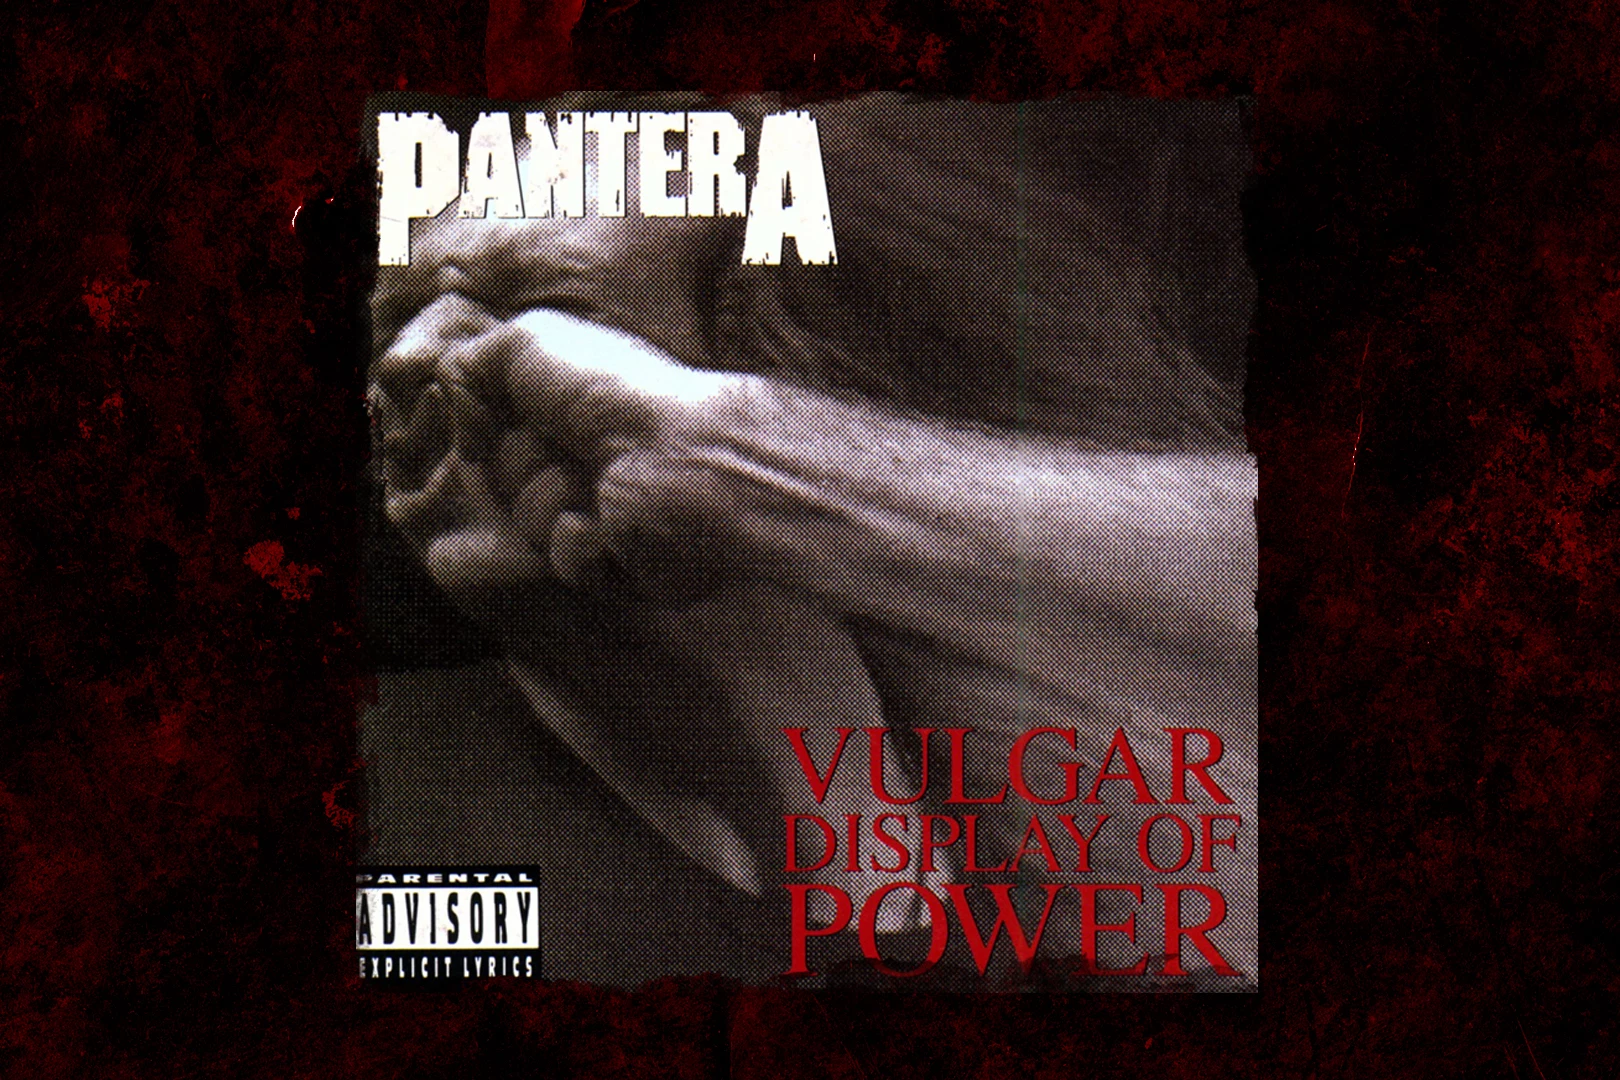 31 Years Ago: Pantera Release 'Vulgar Display of Power'